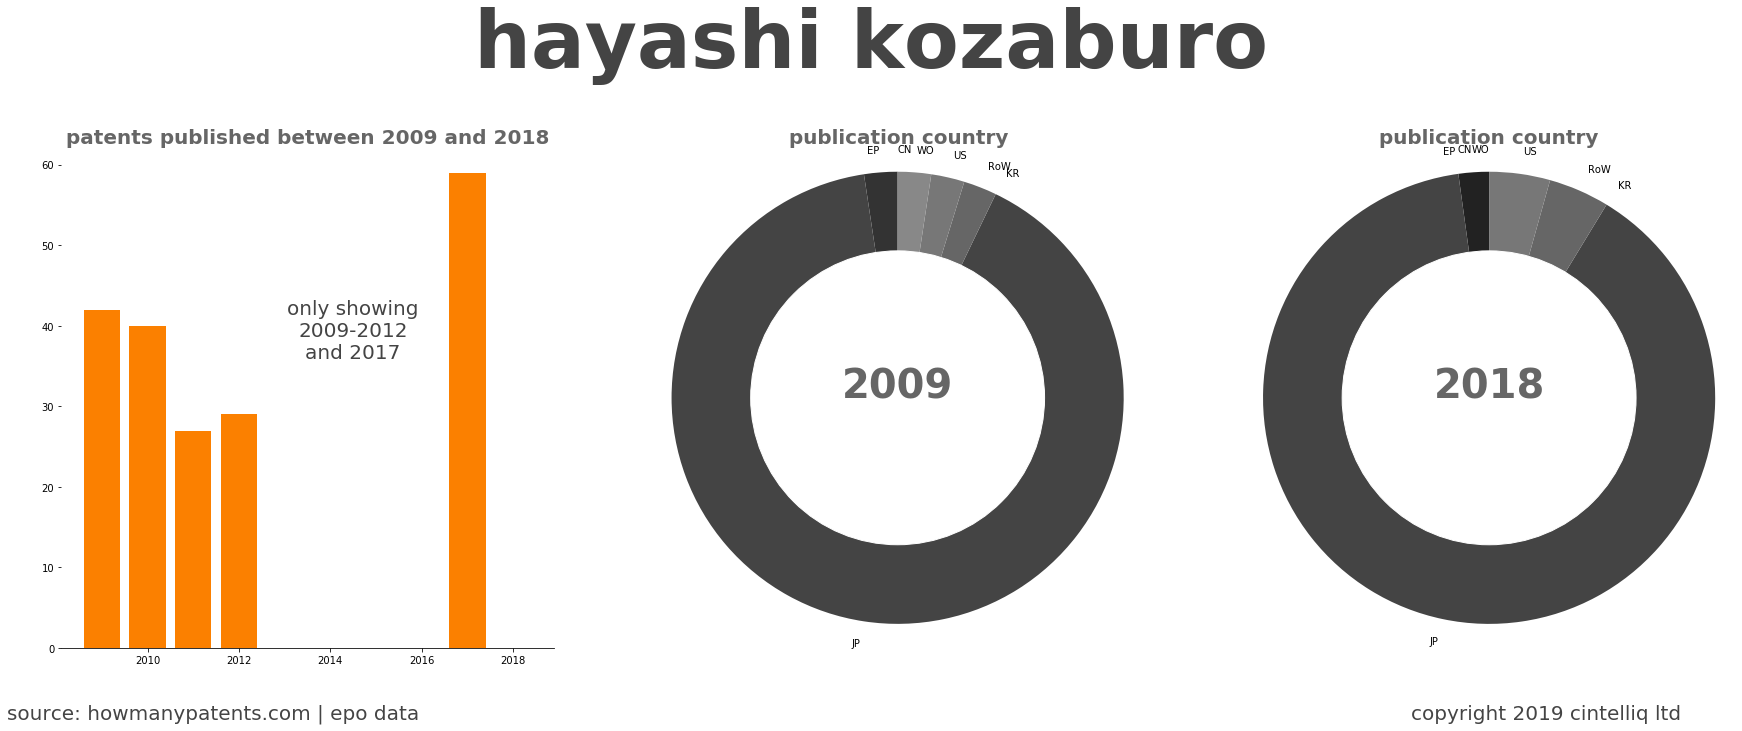 summary of patents for Hayashi Kozaburo